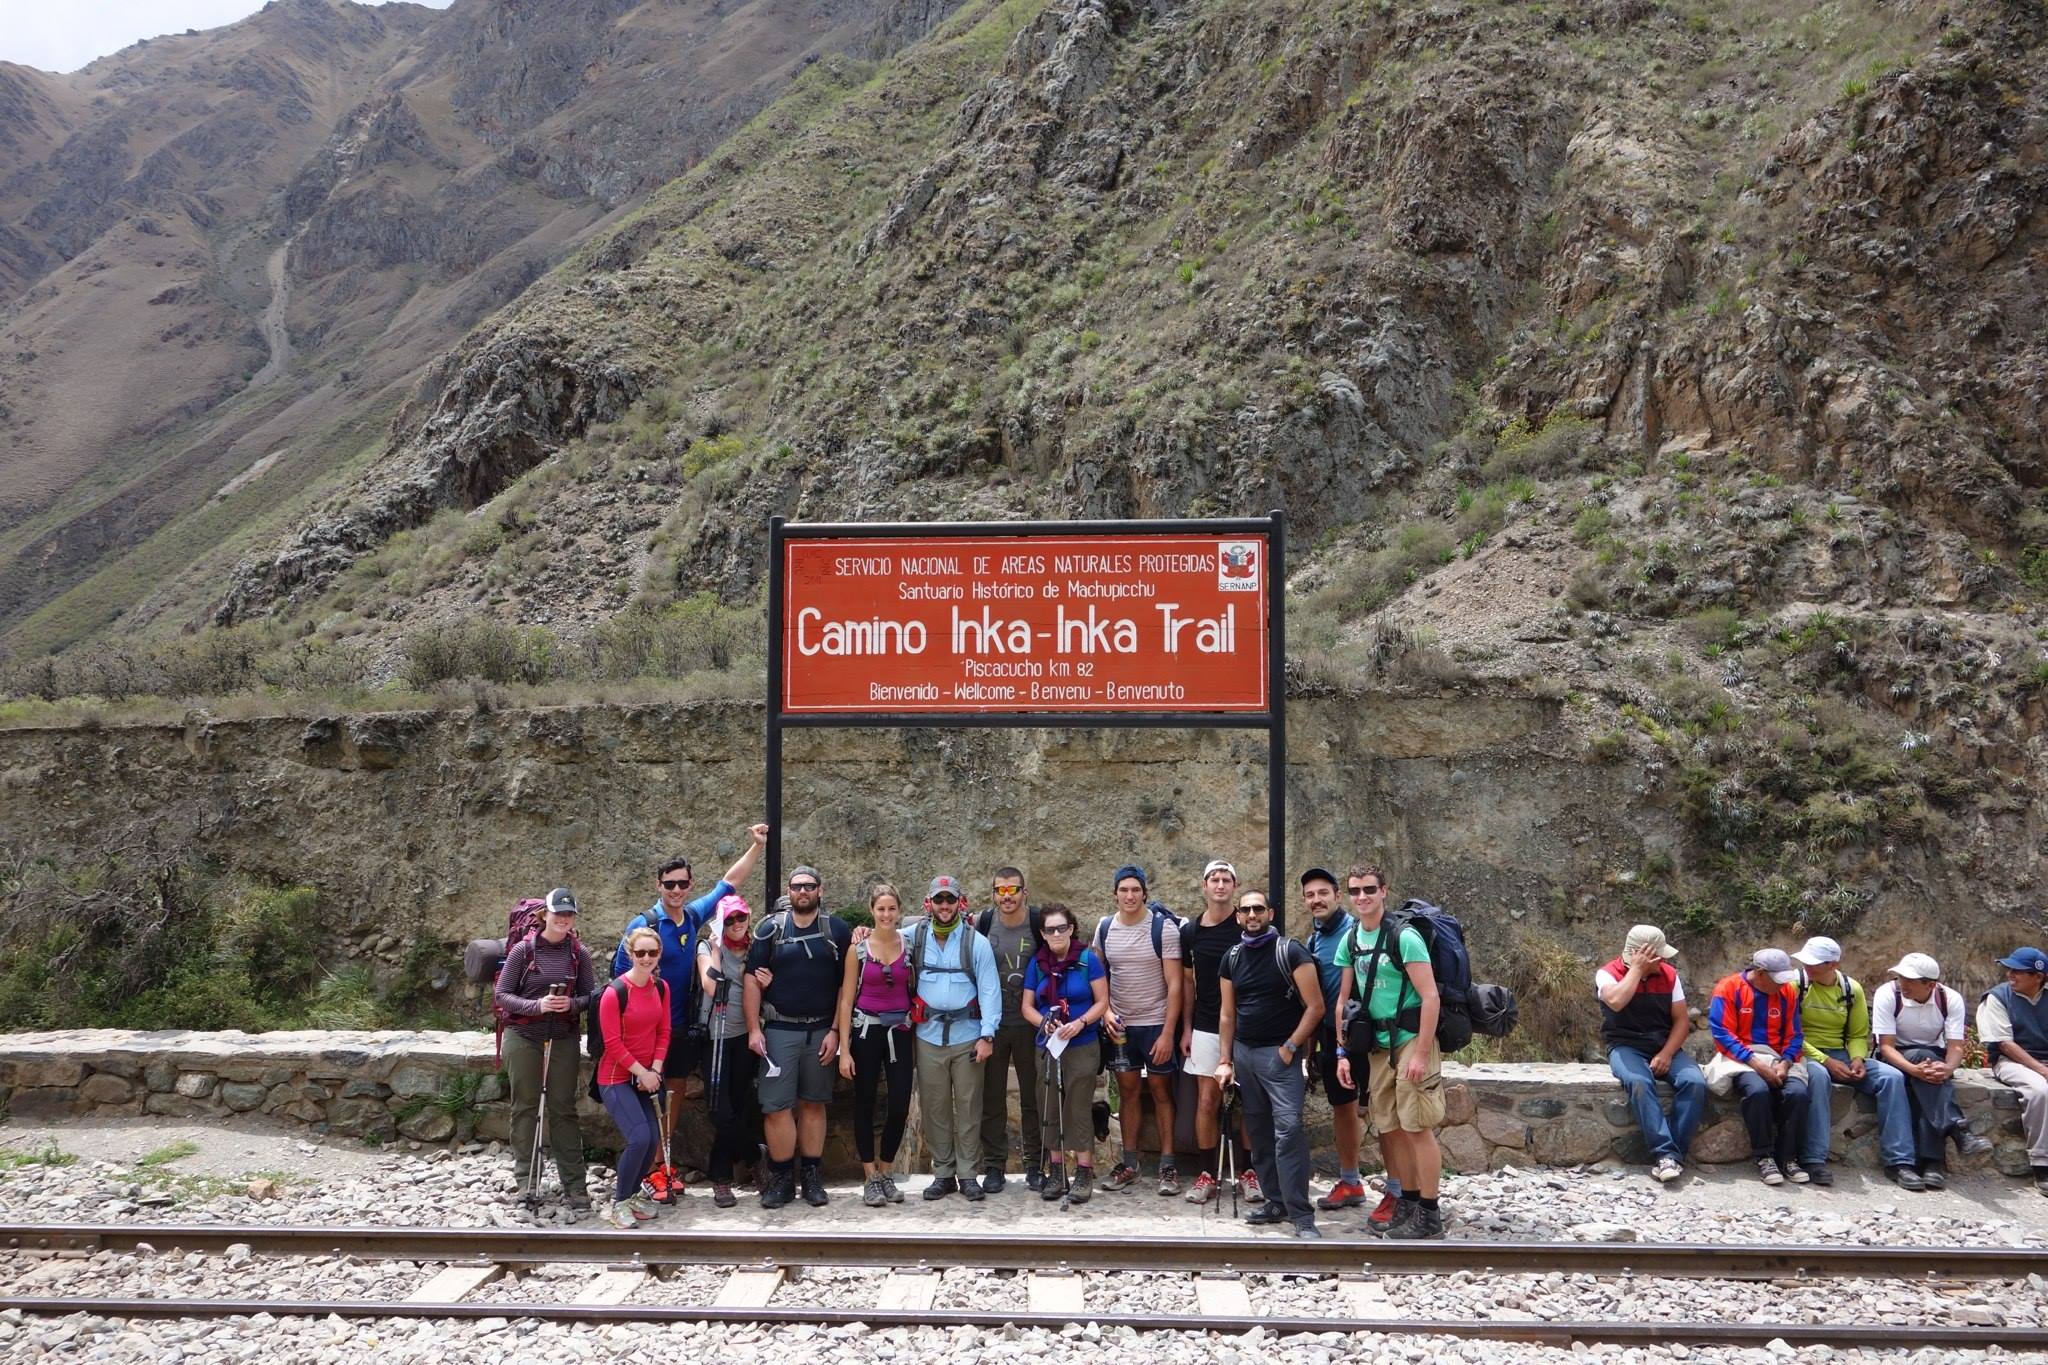 İnkaların Diyarı Peru: İnka Yolu Yürüyüşü ve Machu Picchu